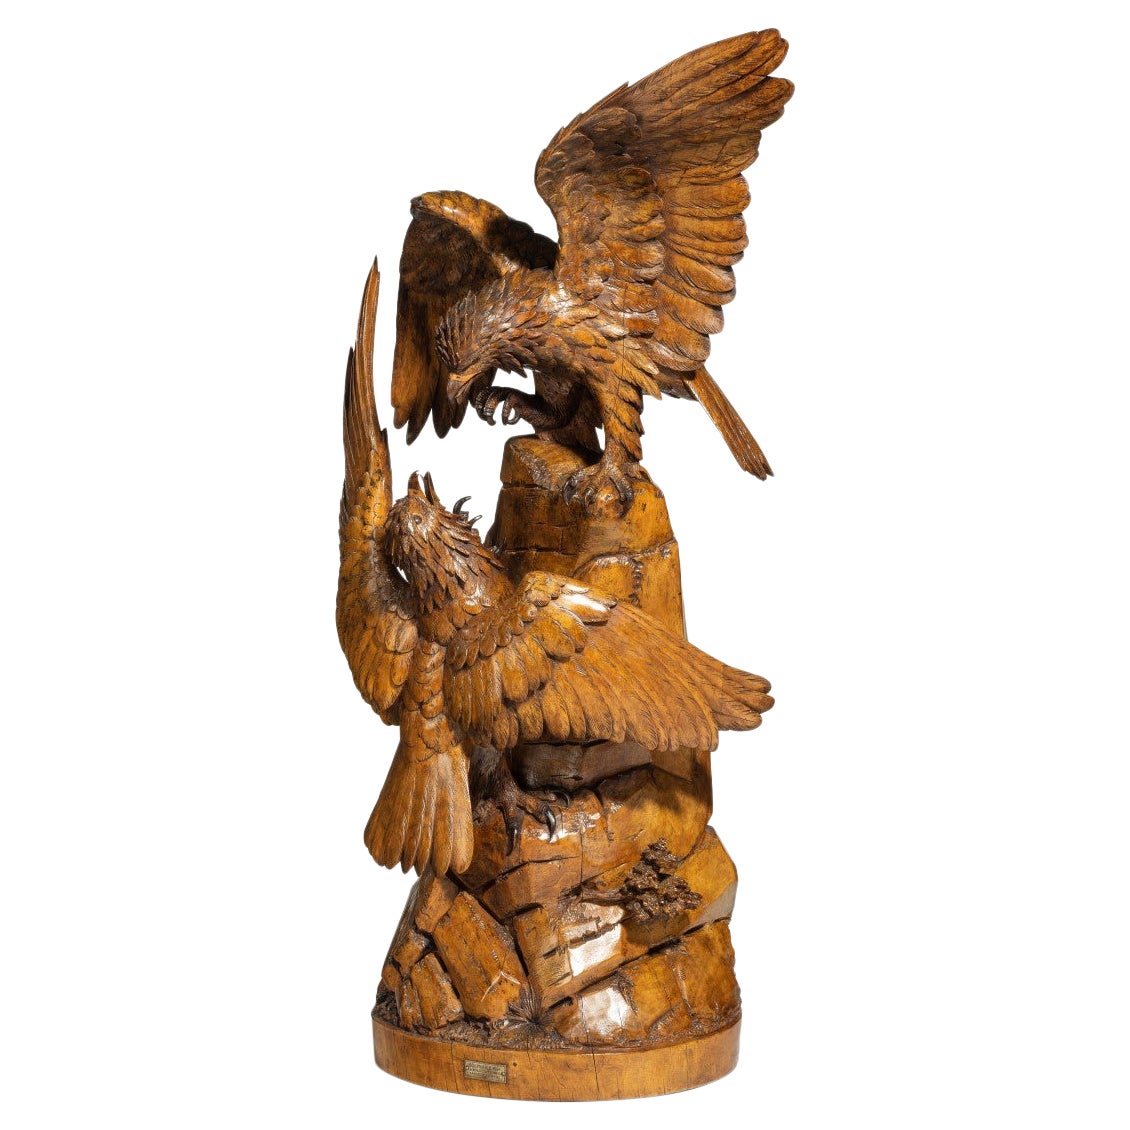 ‘Black Forest’ Carving of Two Quarrelling Golden Eagles